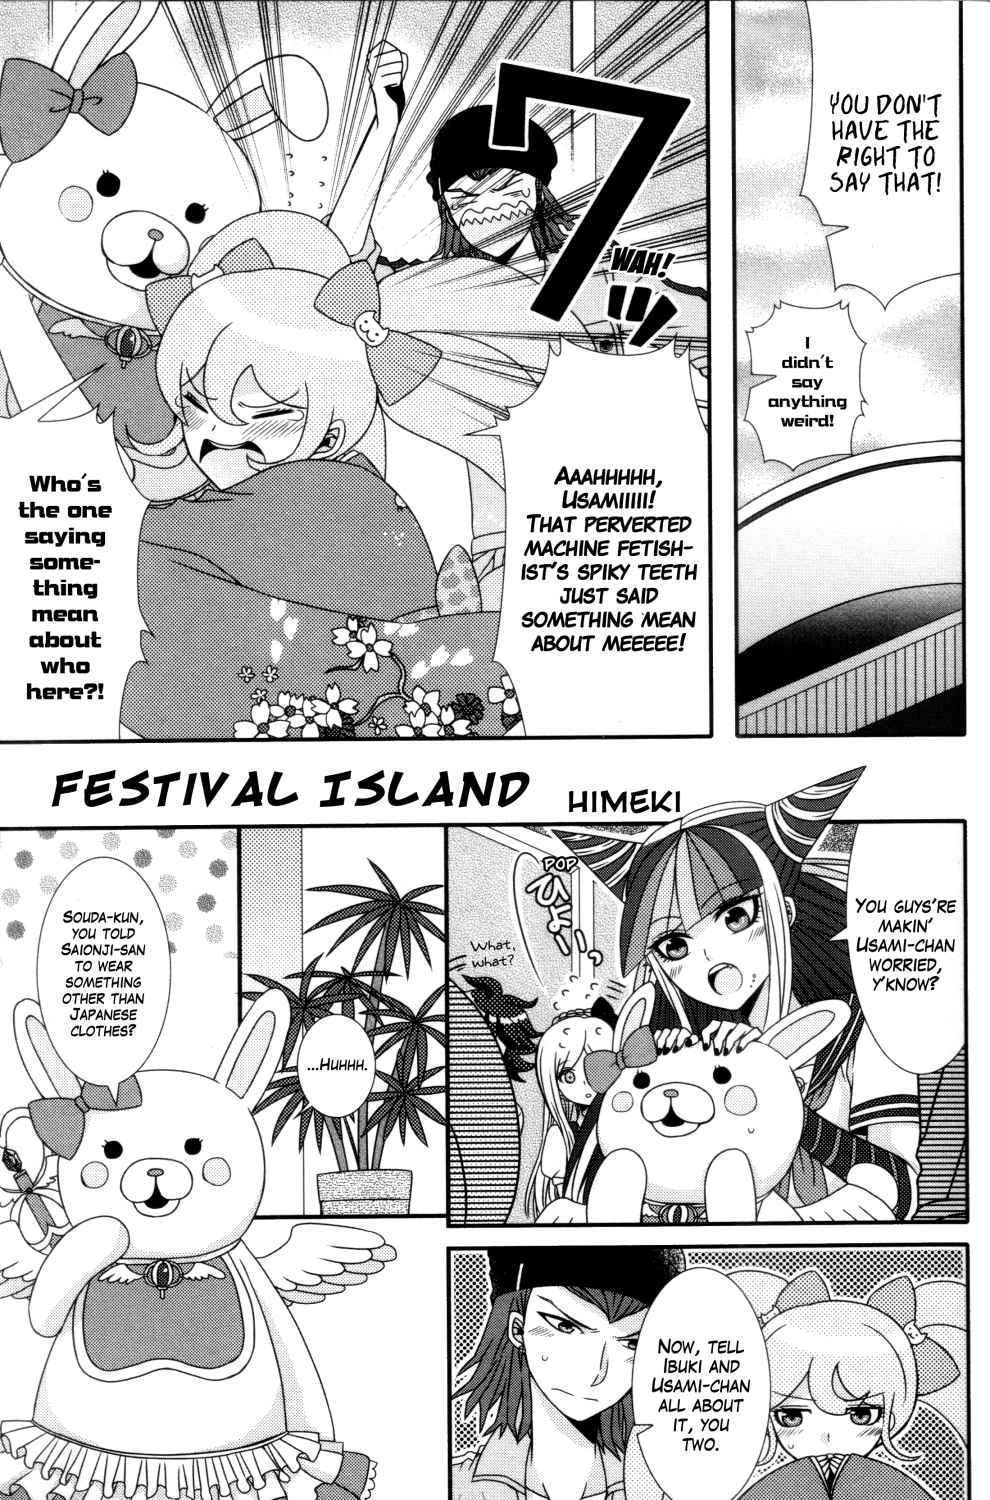 Danganronpa 1&2 Comic Anthology Vol. 1 Ch. 14 Festival Island by Himeki